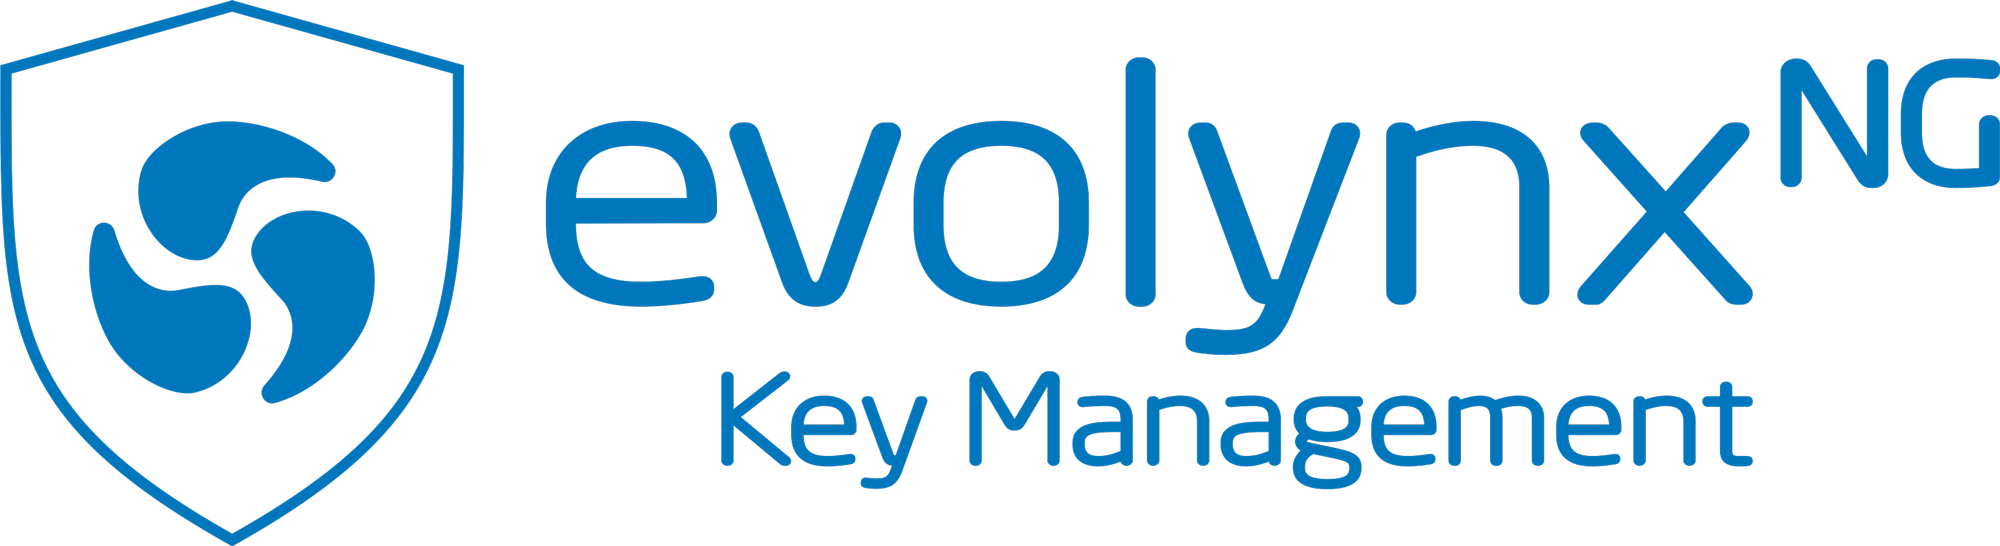 logo evolynxNG software key management